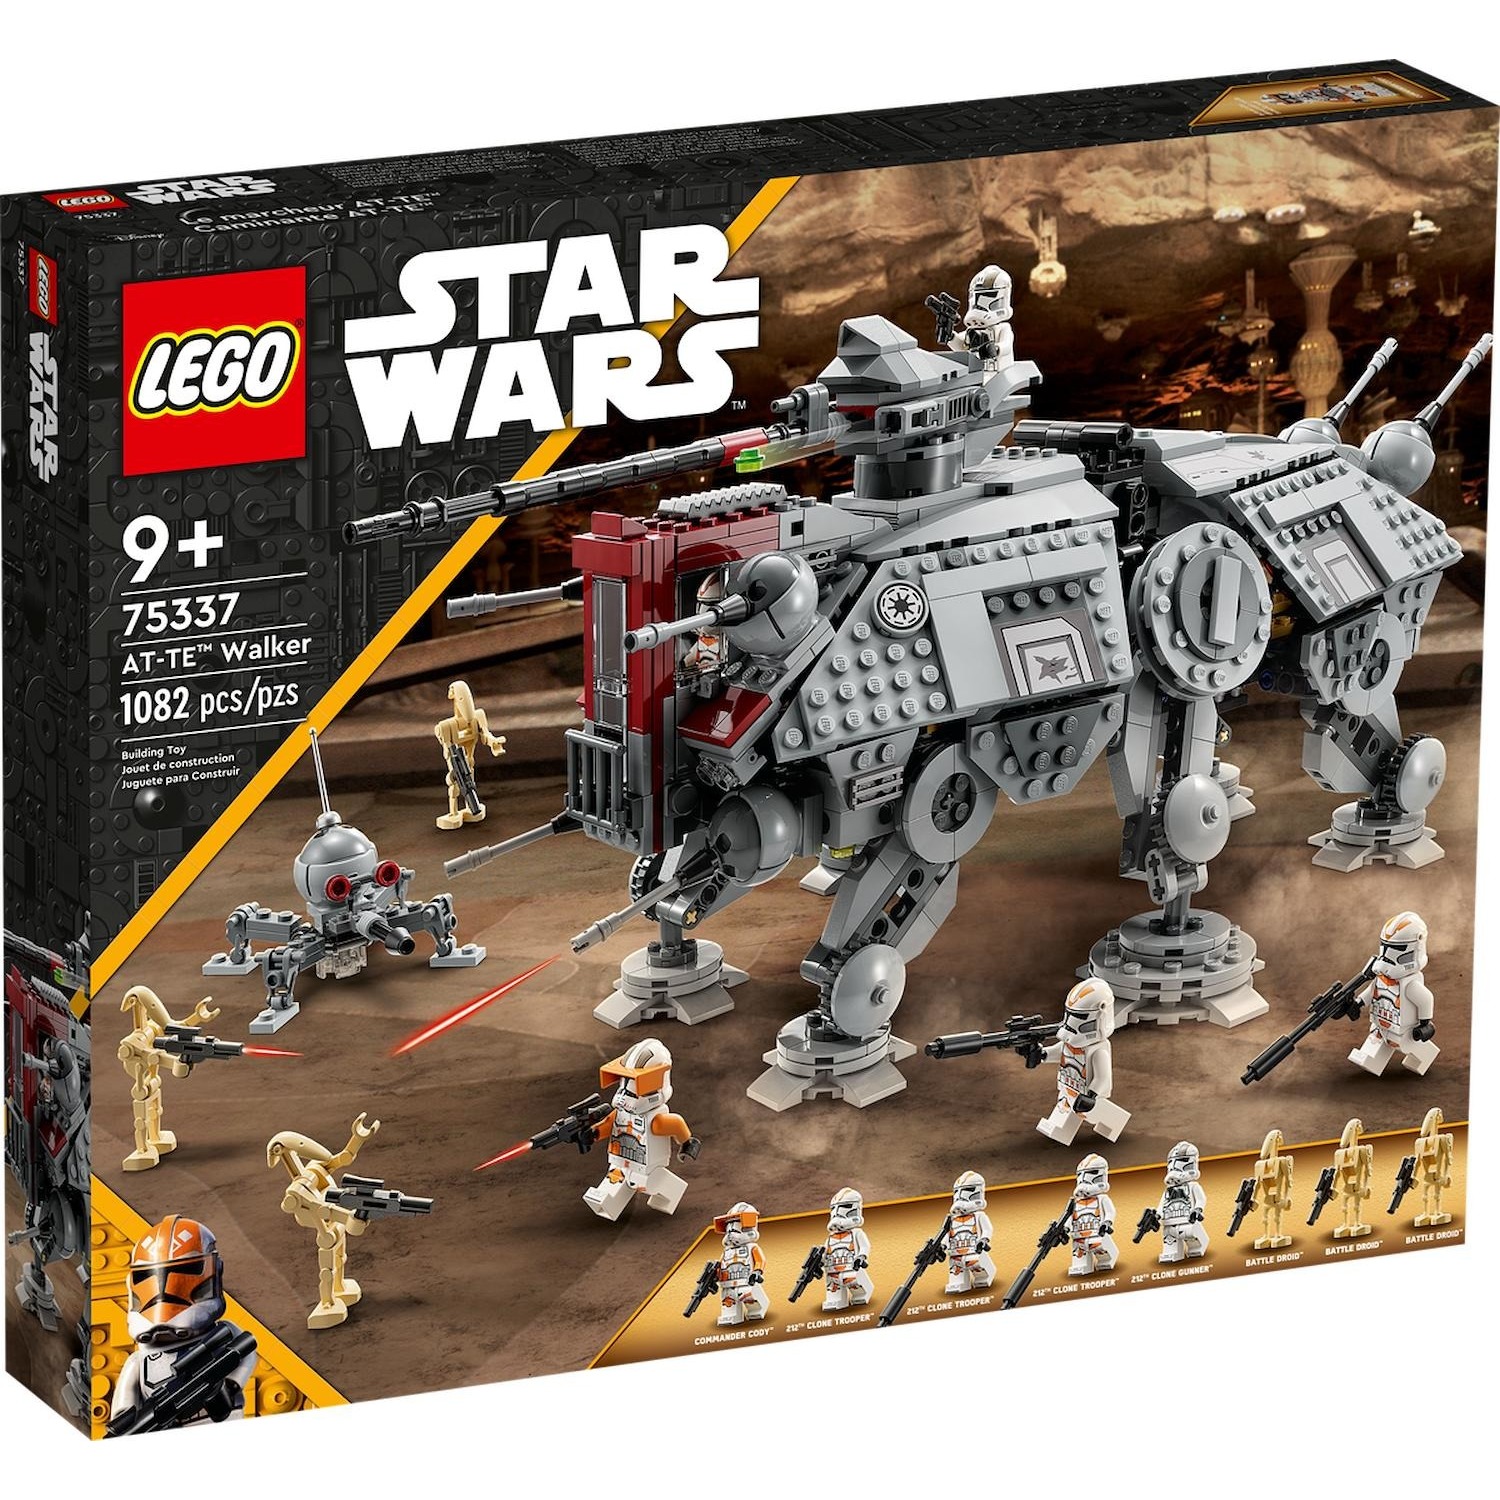 Immagine per Lego Star Wars Walker AT-TE da DIMOStore